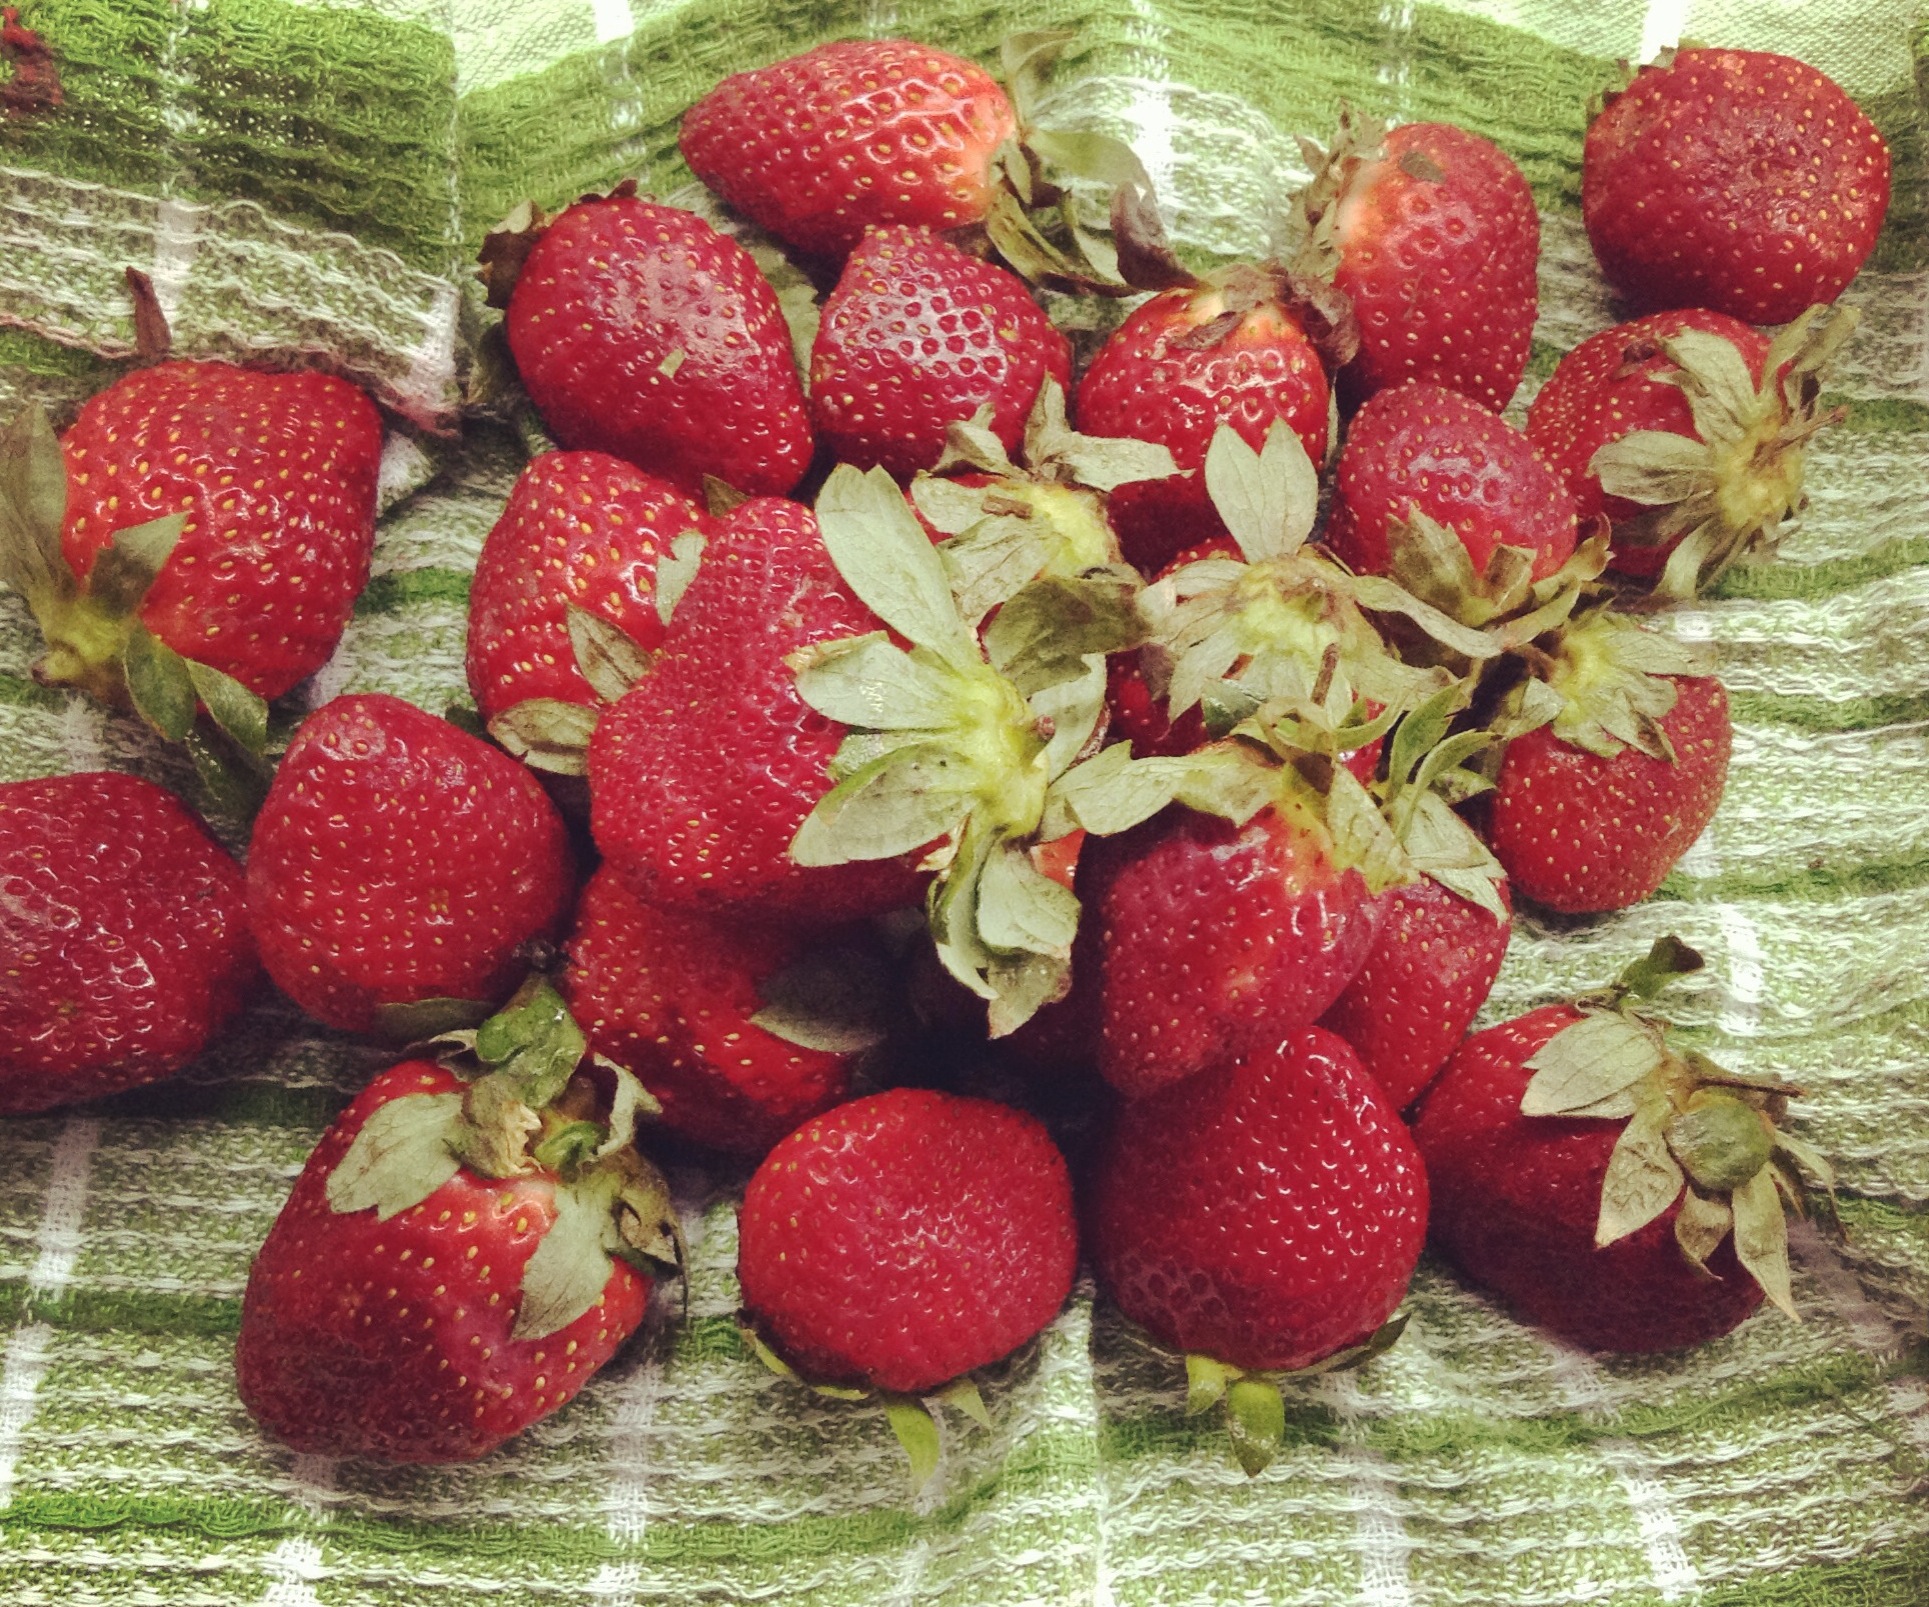 Non-organic strawberries